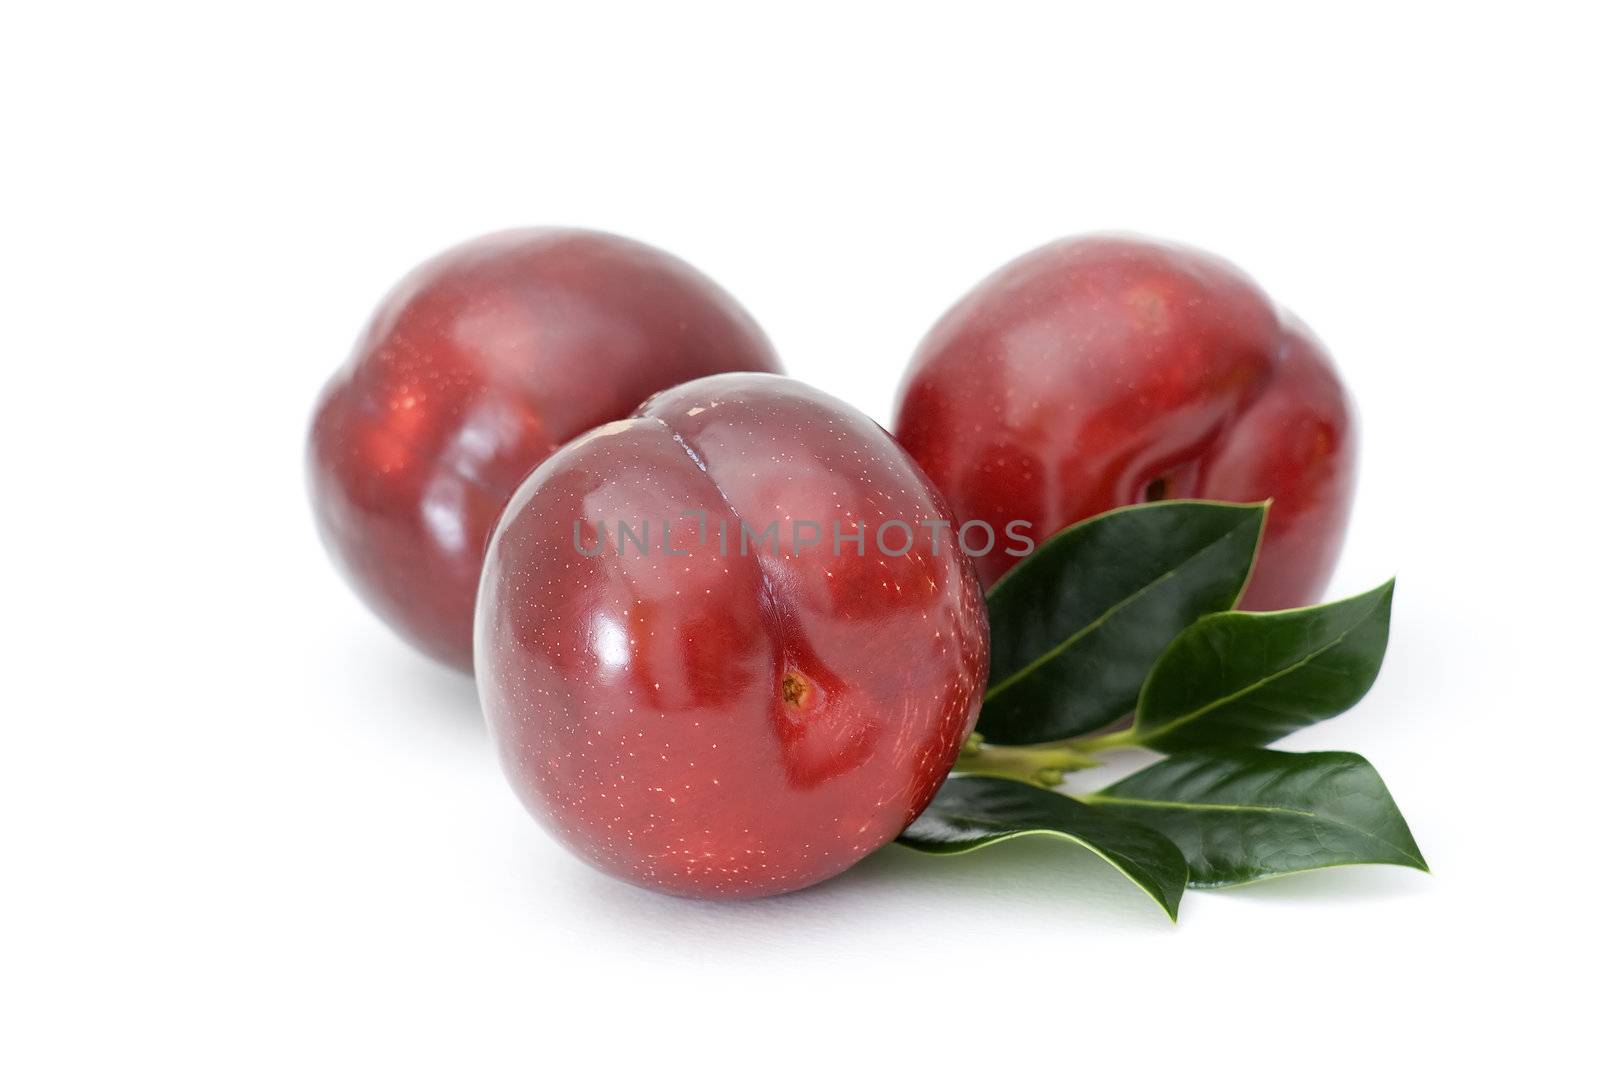 red plums by miradrozdowski